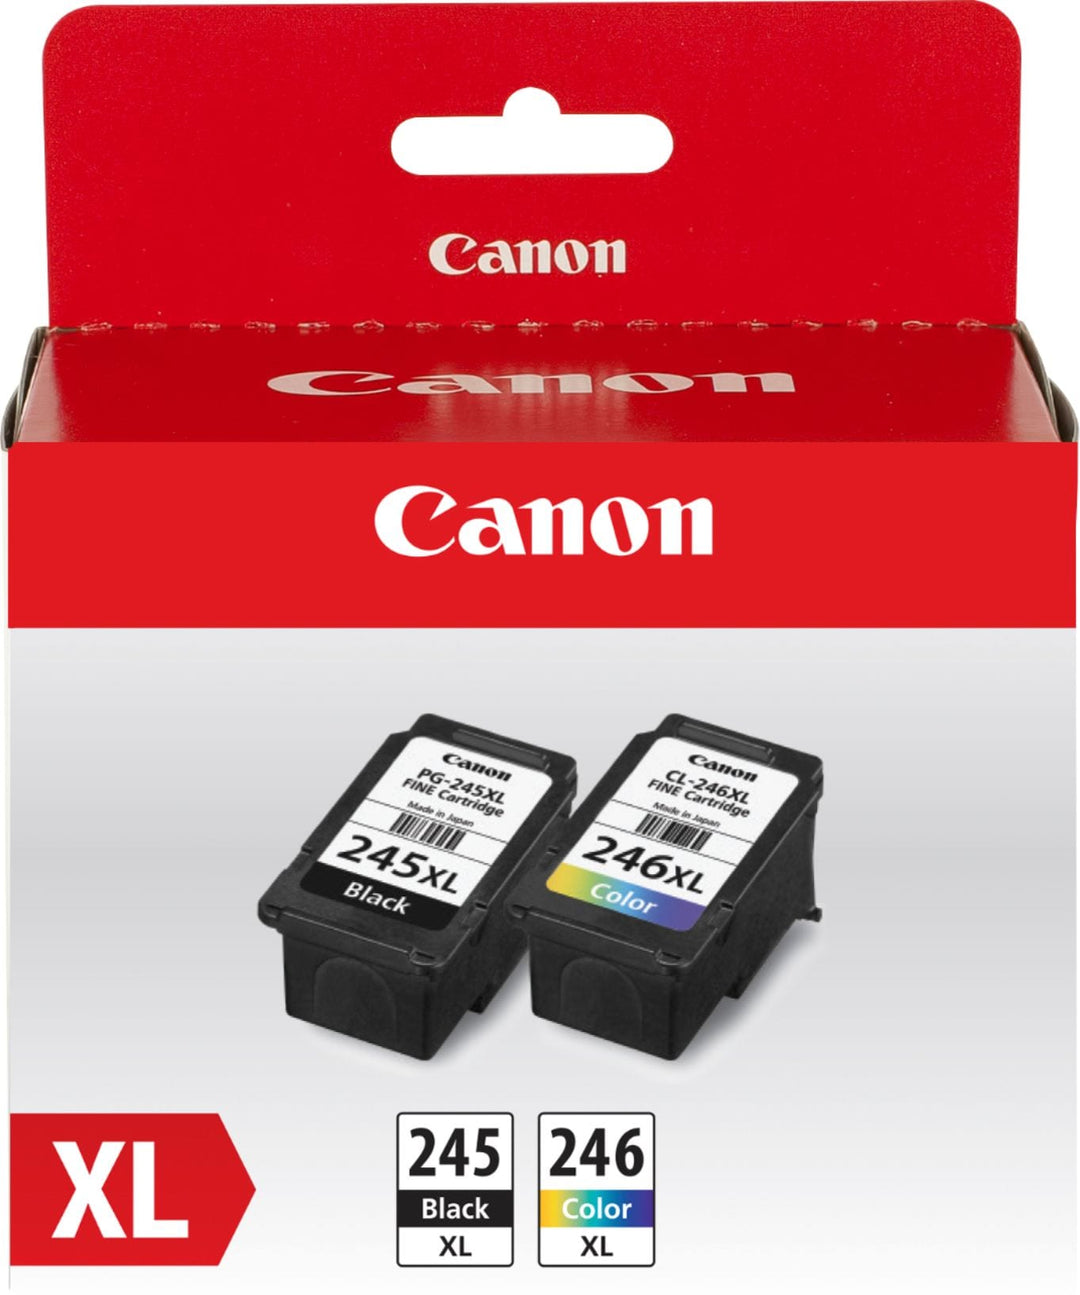 Canon - PG-245 XL / CL-246 XL 2-Pack High-Yield Ink Cartridges - Black/Cyan/Magenta/Yellow_0